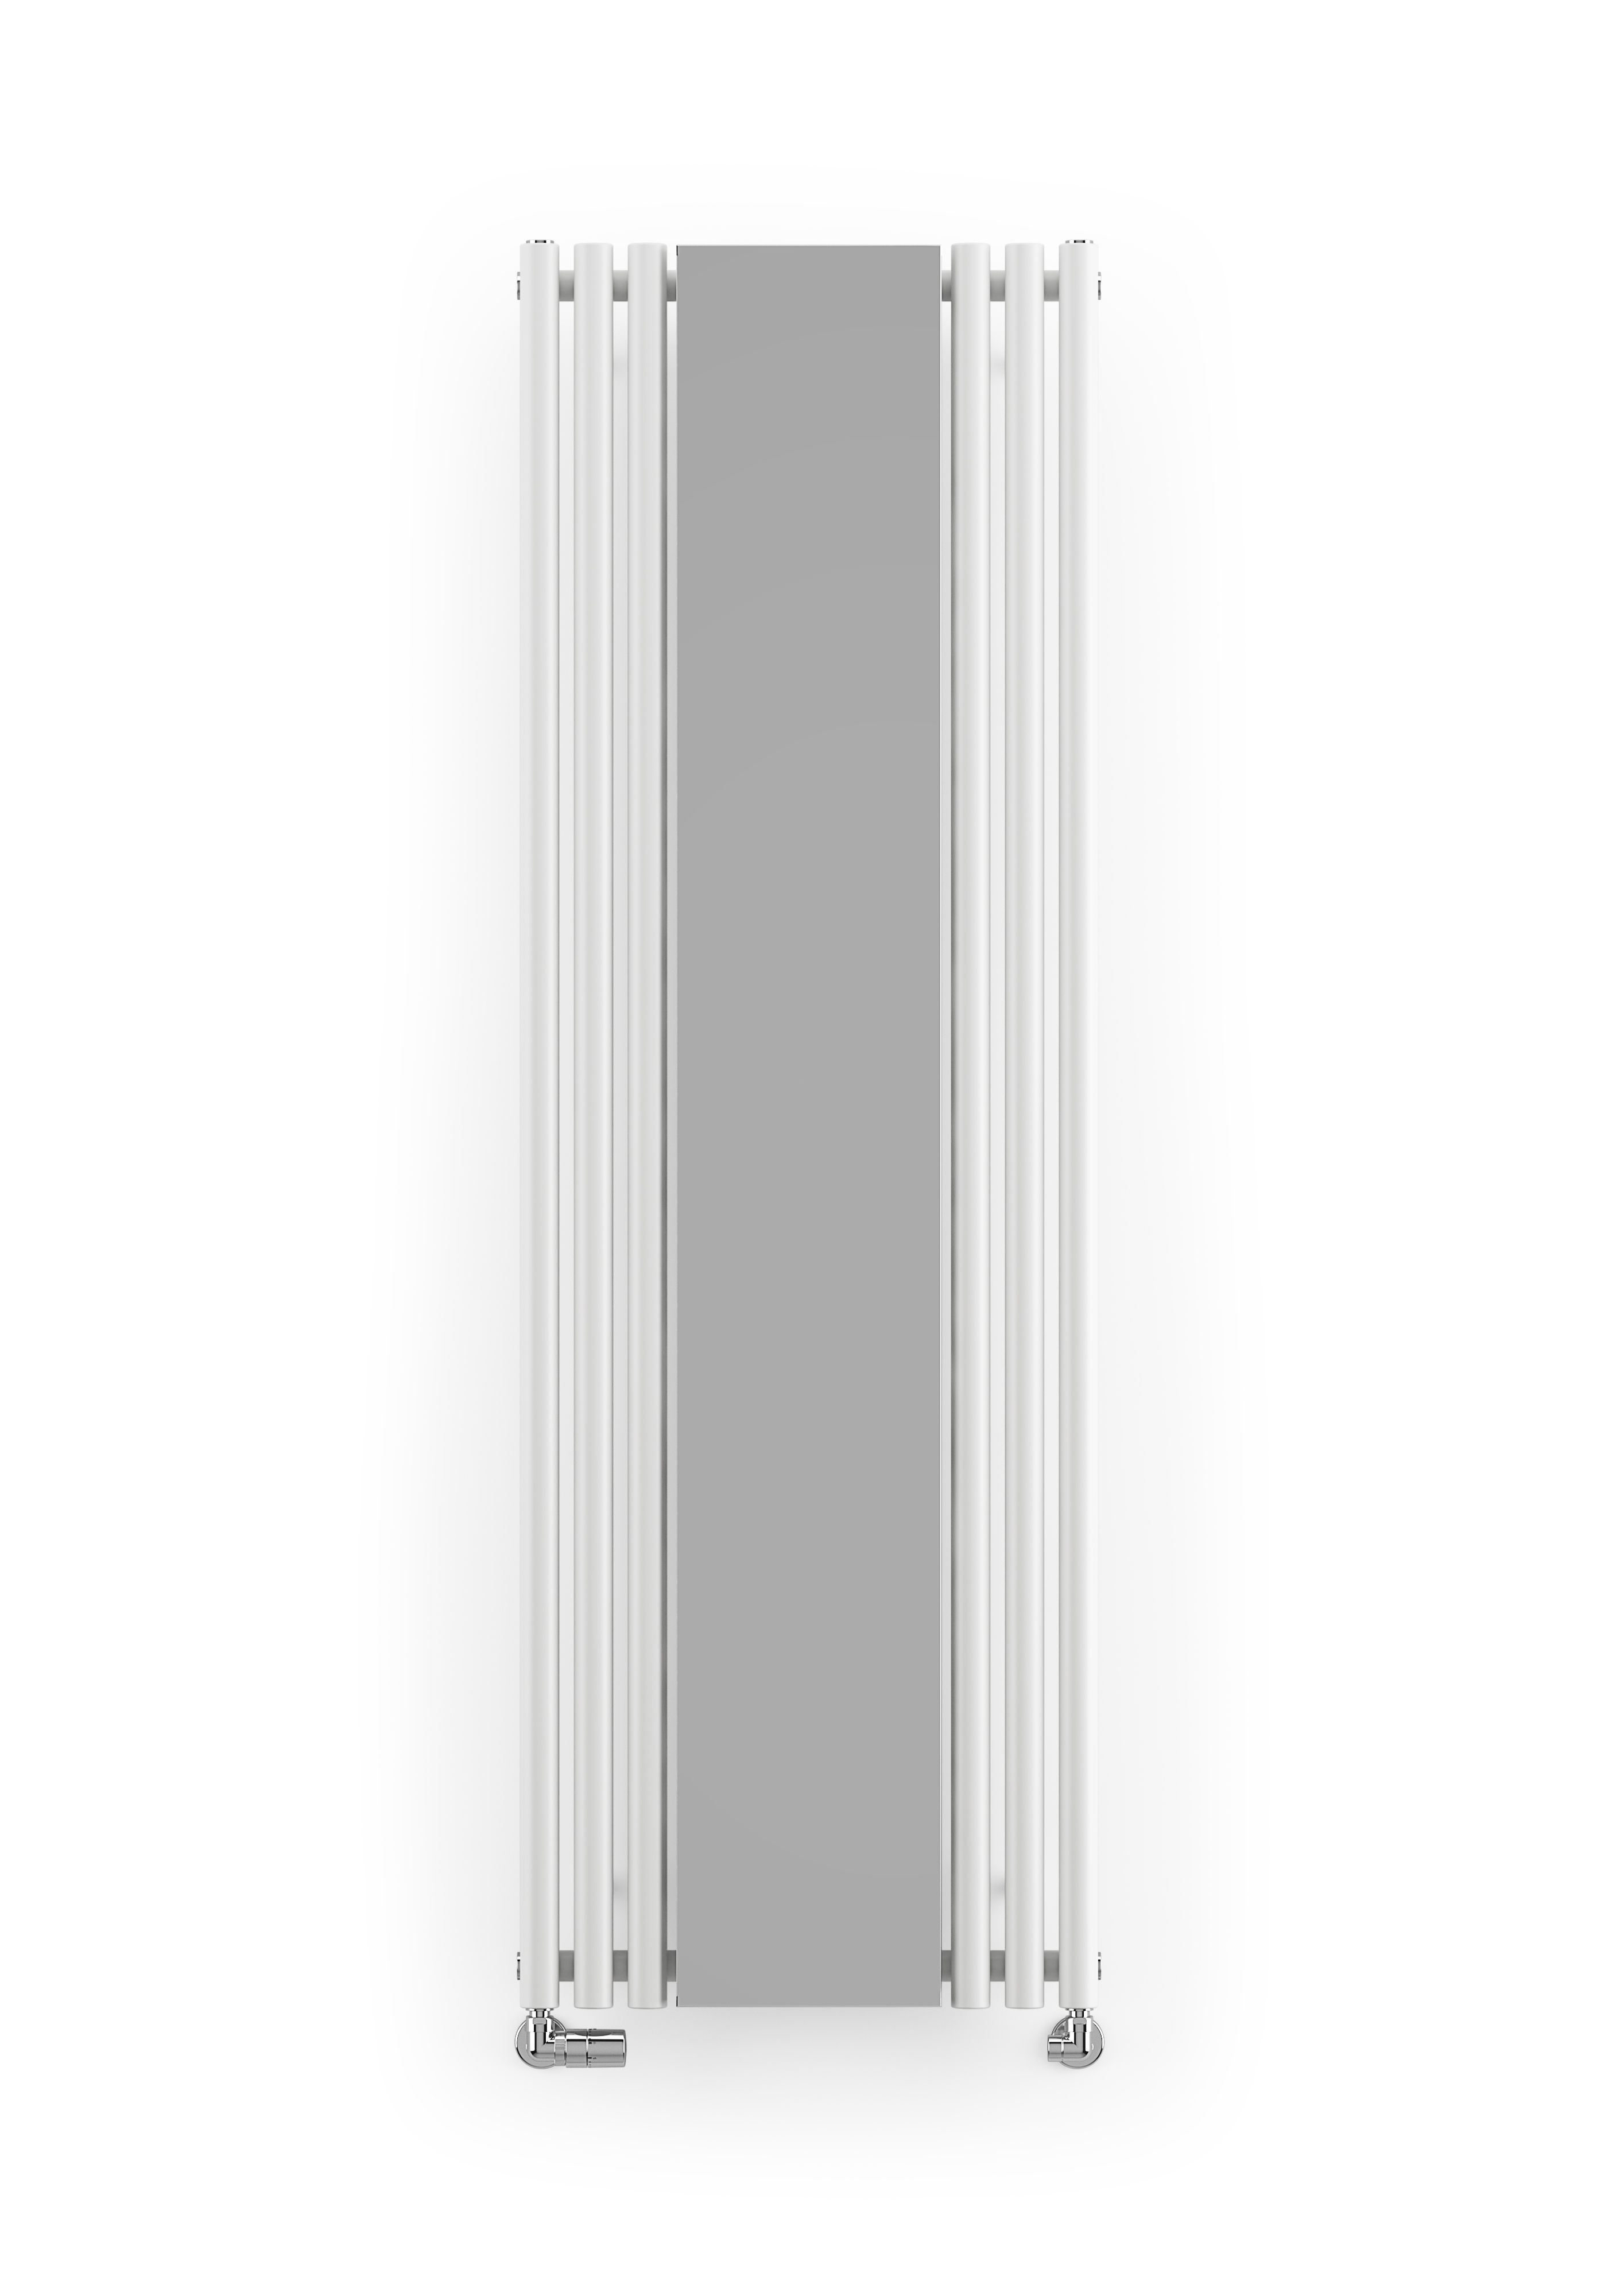 Terma Rolo mirror White Vertical Designer Radiator, (W)590mm x (H)1800mm